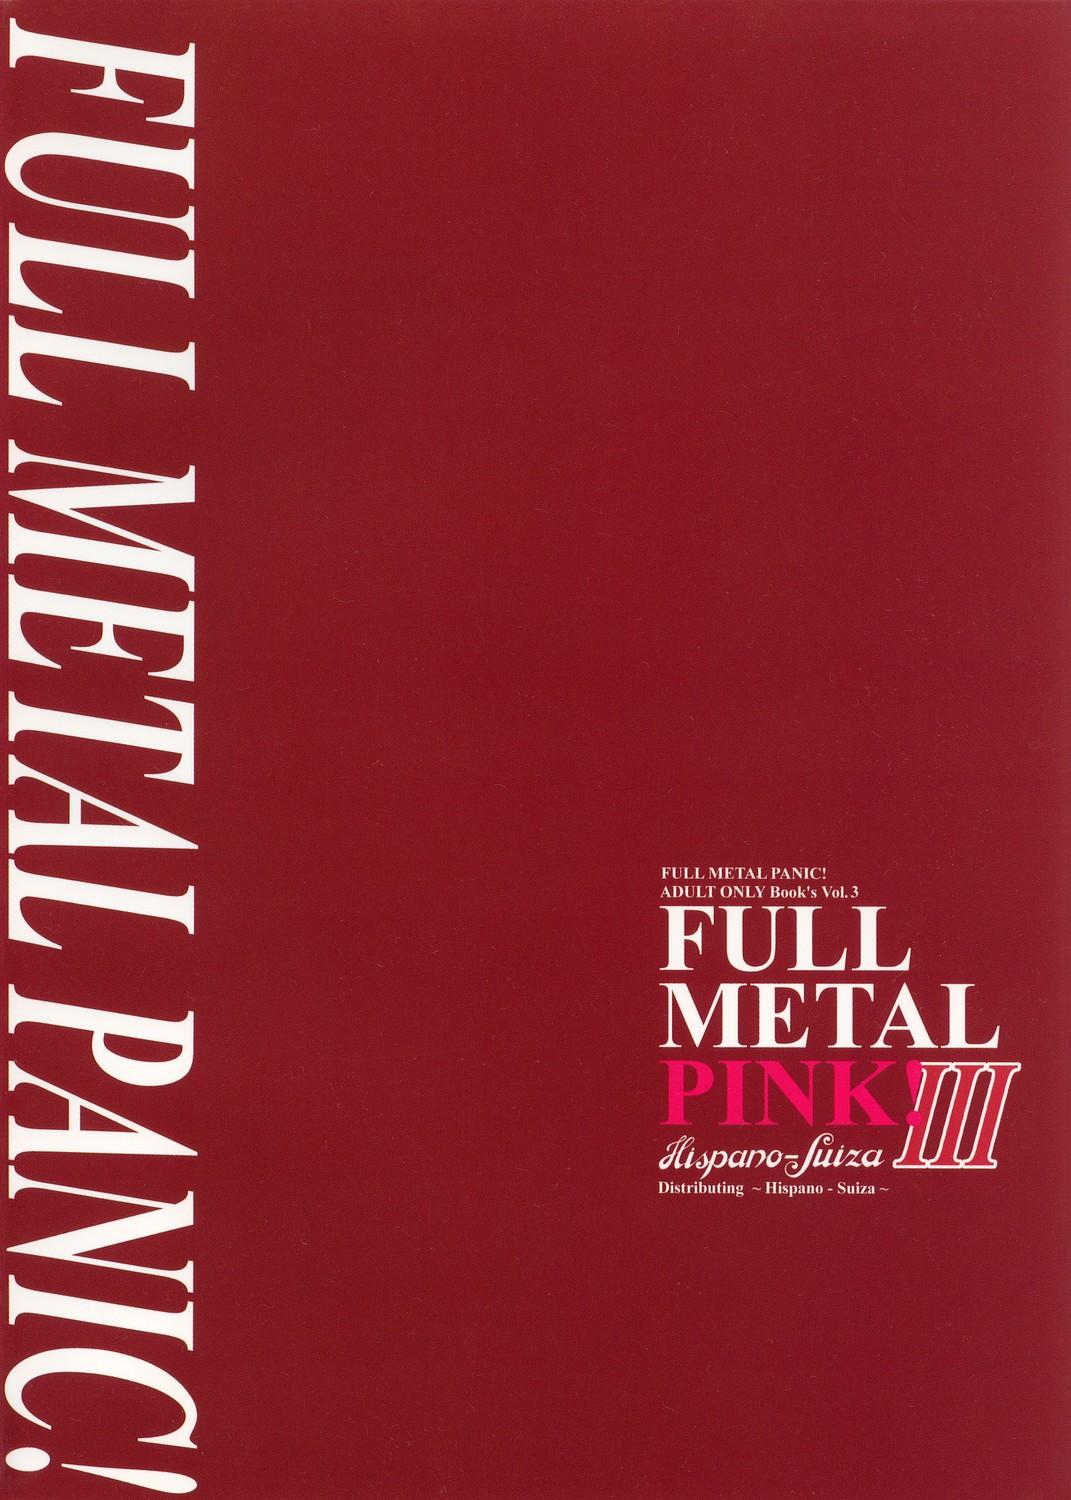 FULL METAL PINK! III 49